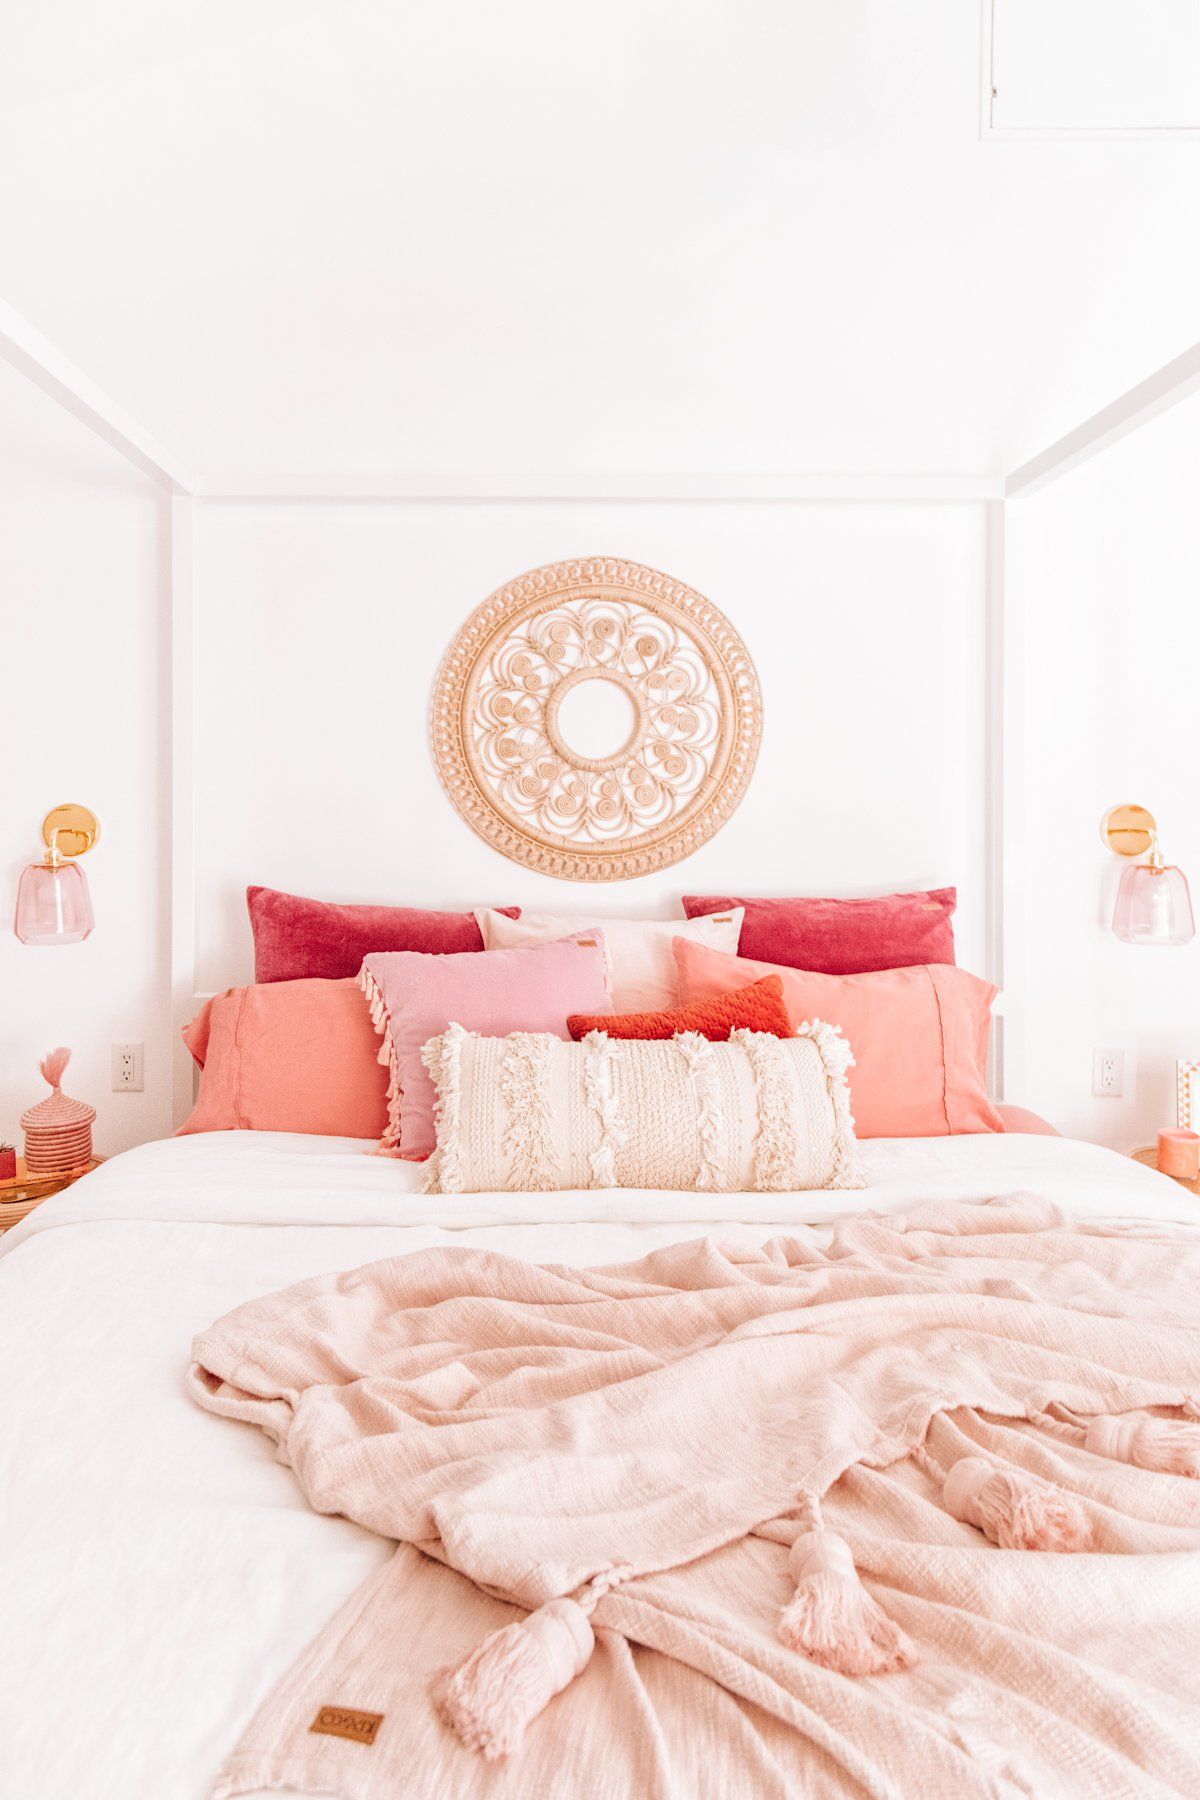 20 Best Romantic Bedroom Ideas   Romantic Decorating Ideas for Couples